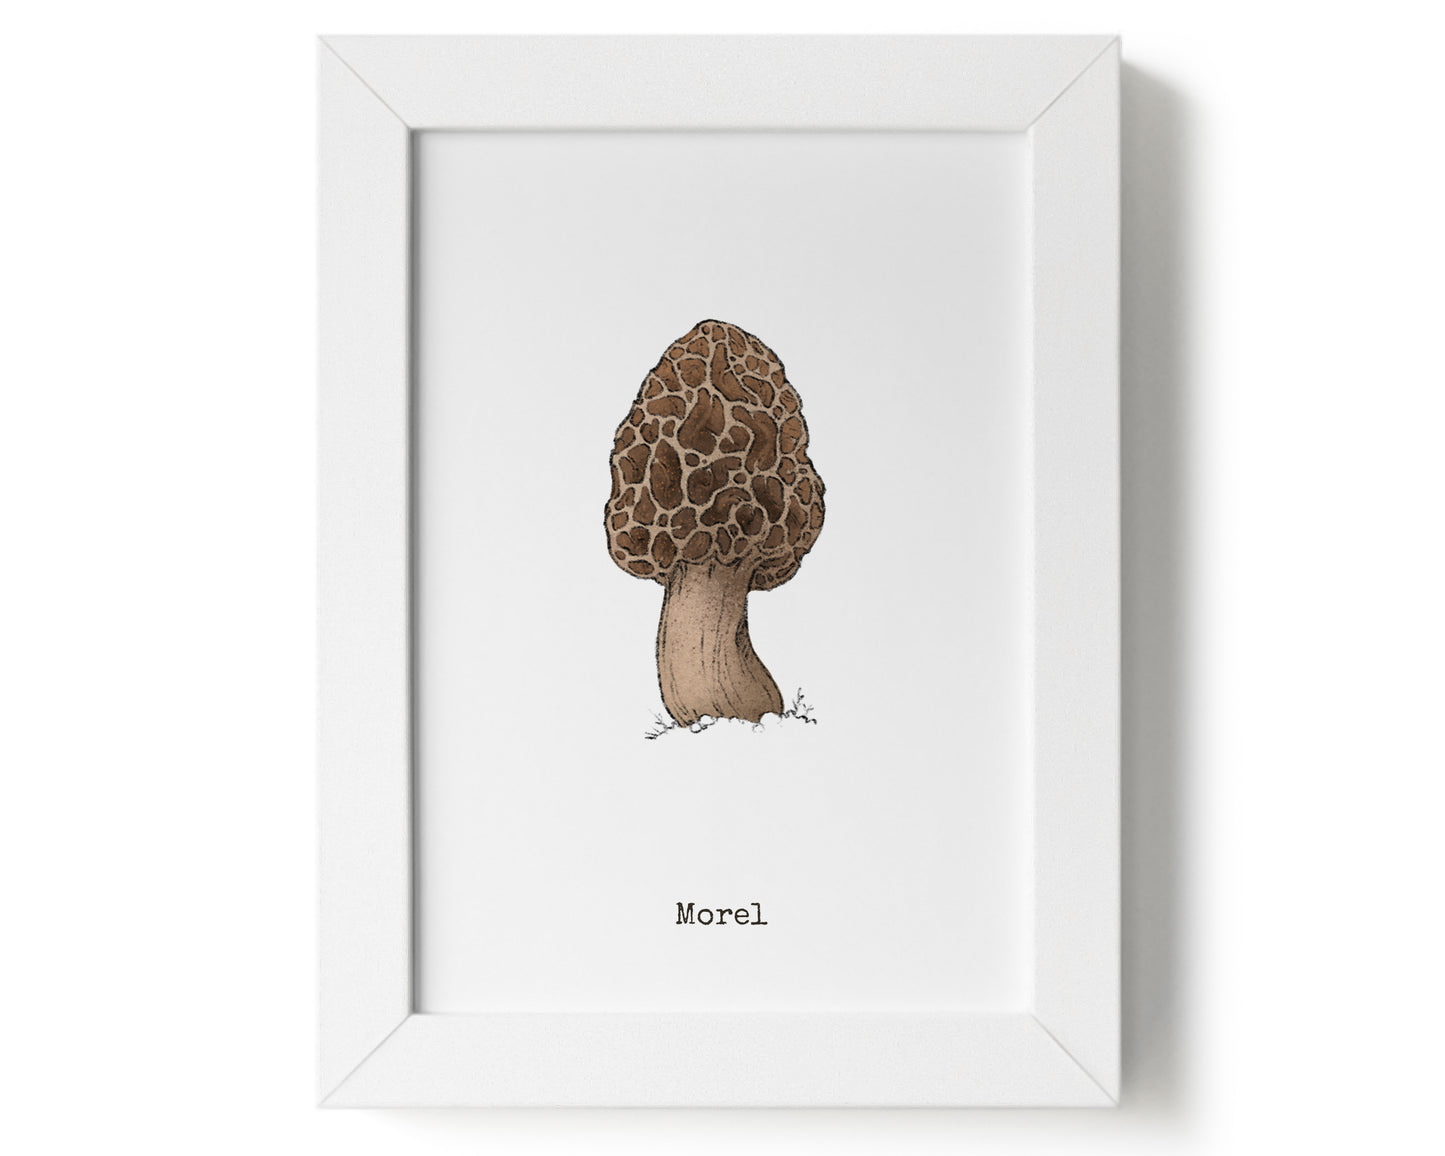 "Morel Mushroom" by Catherine Hébert - Morel Mushroom Art Print - 5"x7" size